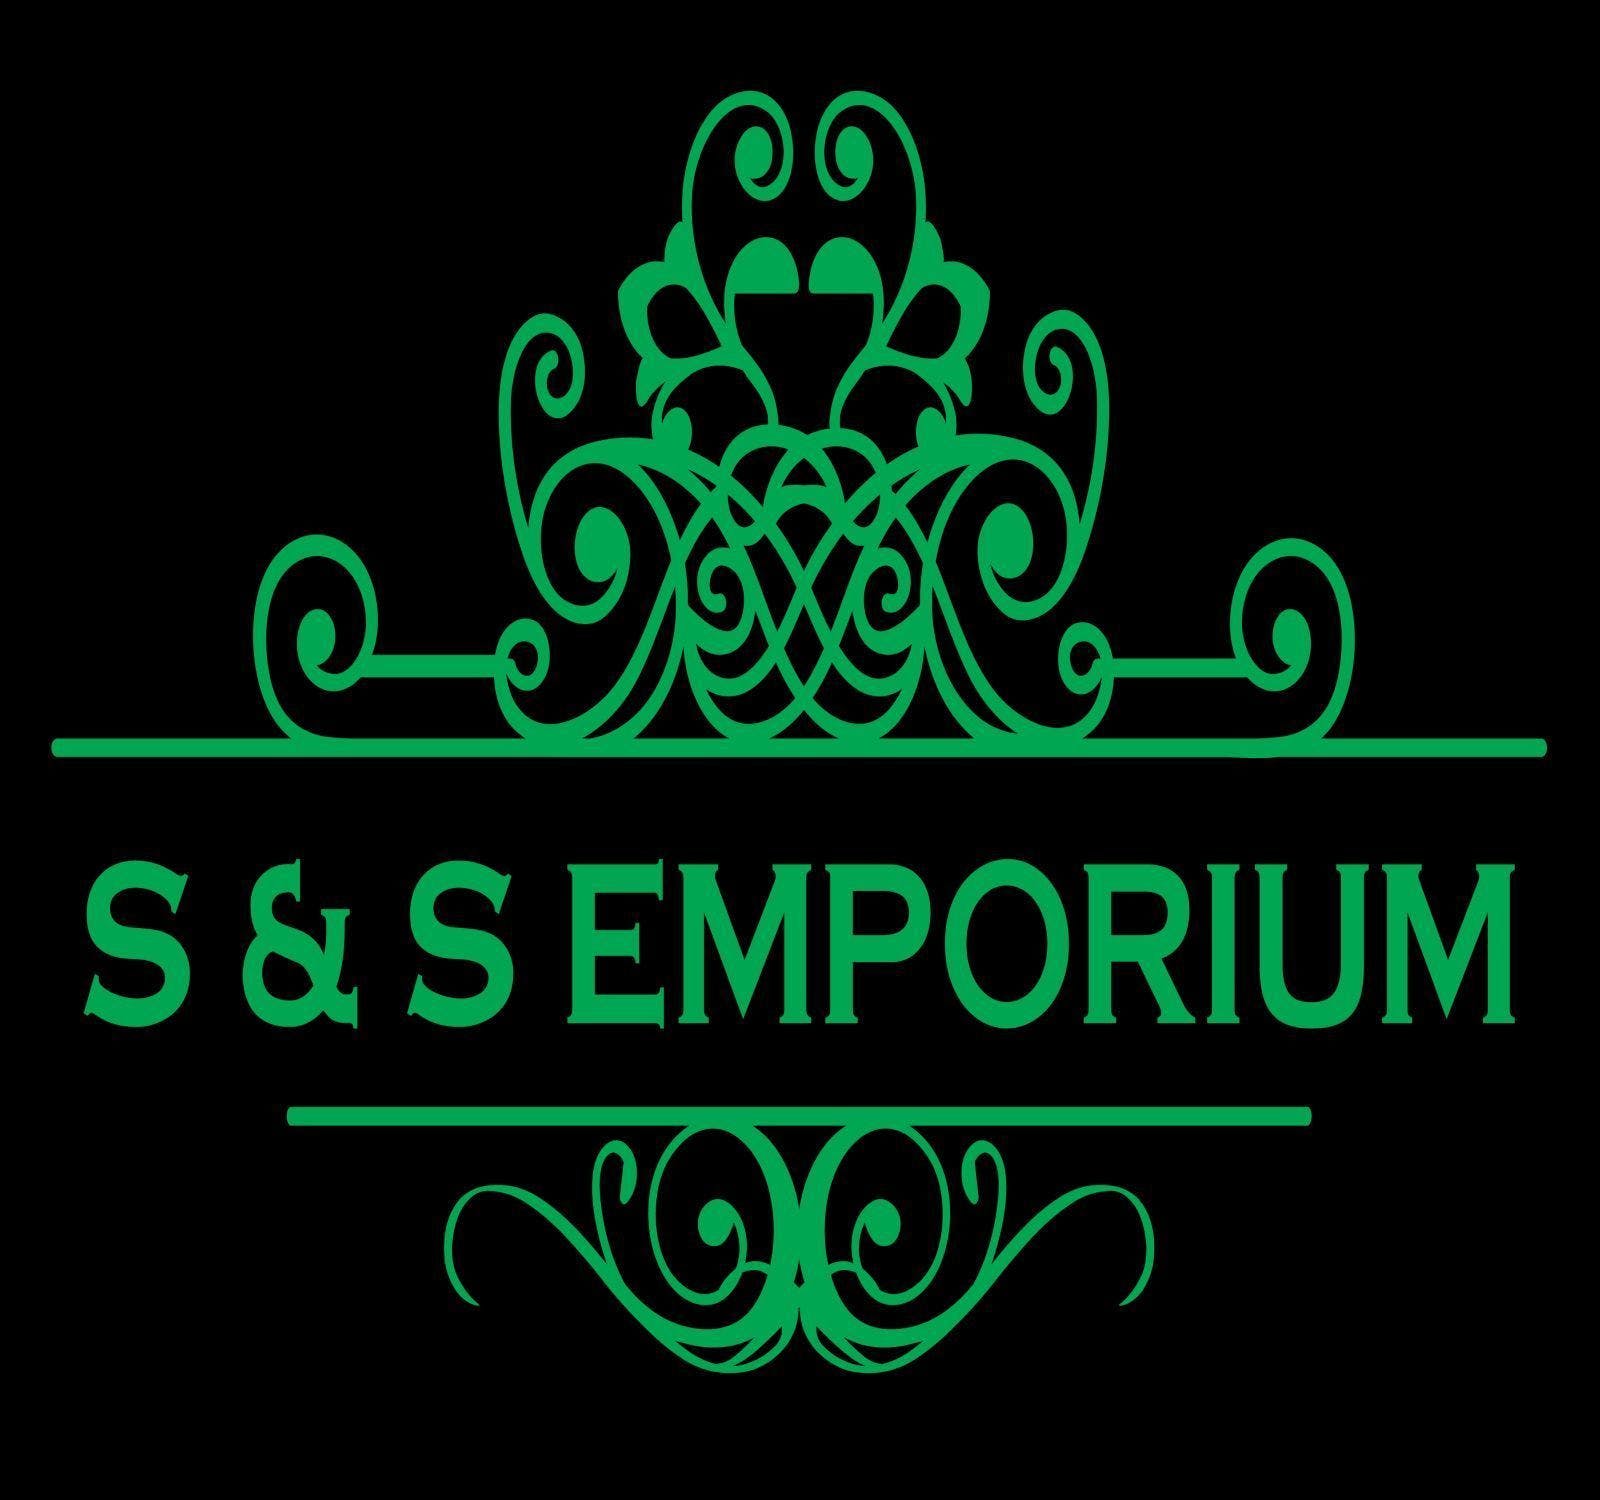 S & S Emporium - Medical Marijuana Doctors - Cannabizme.com